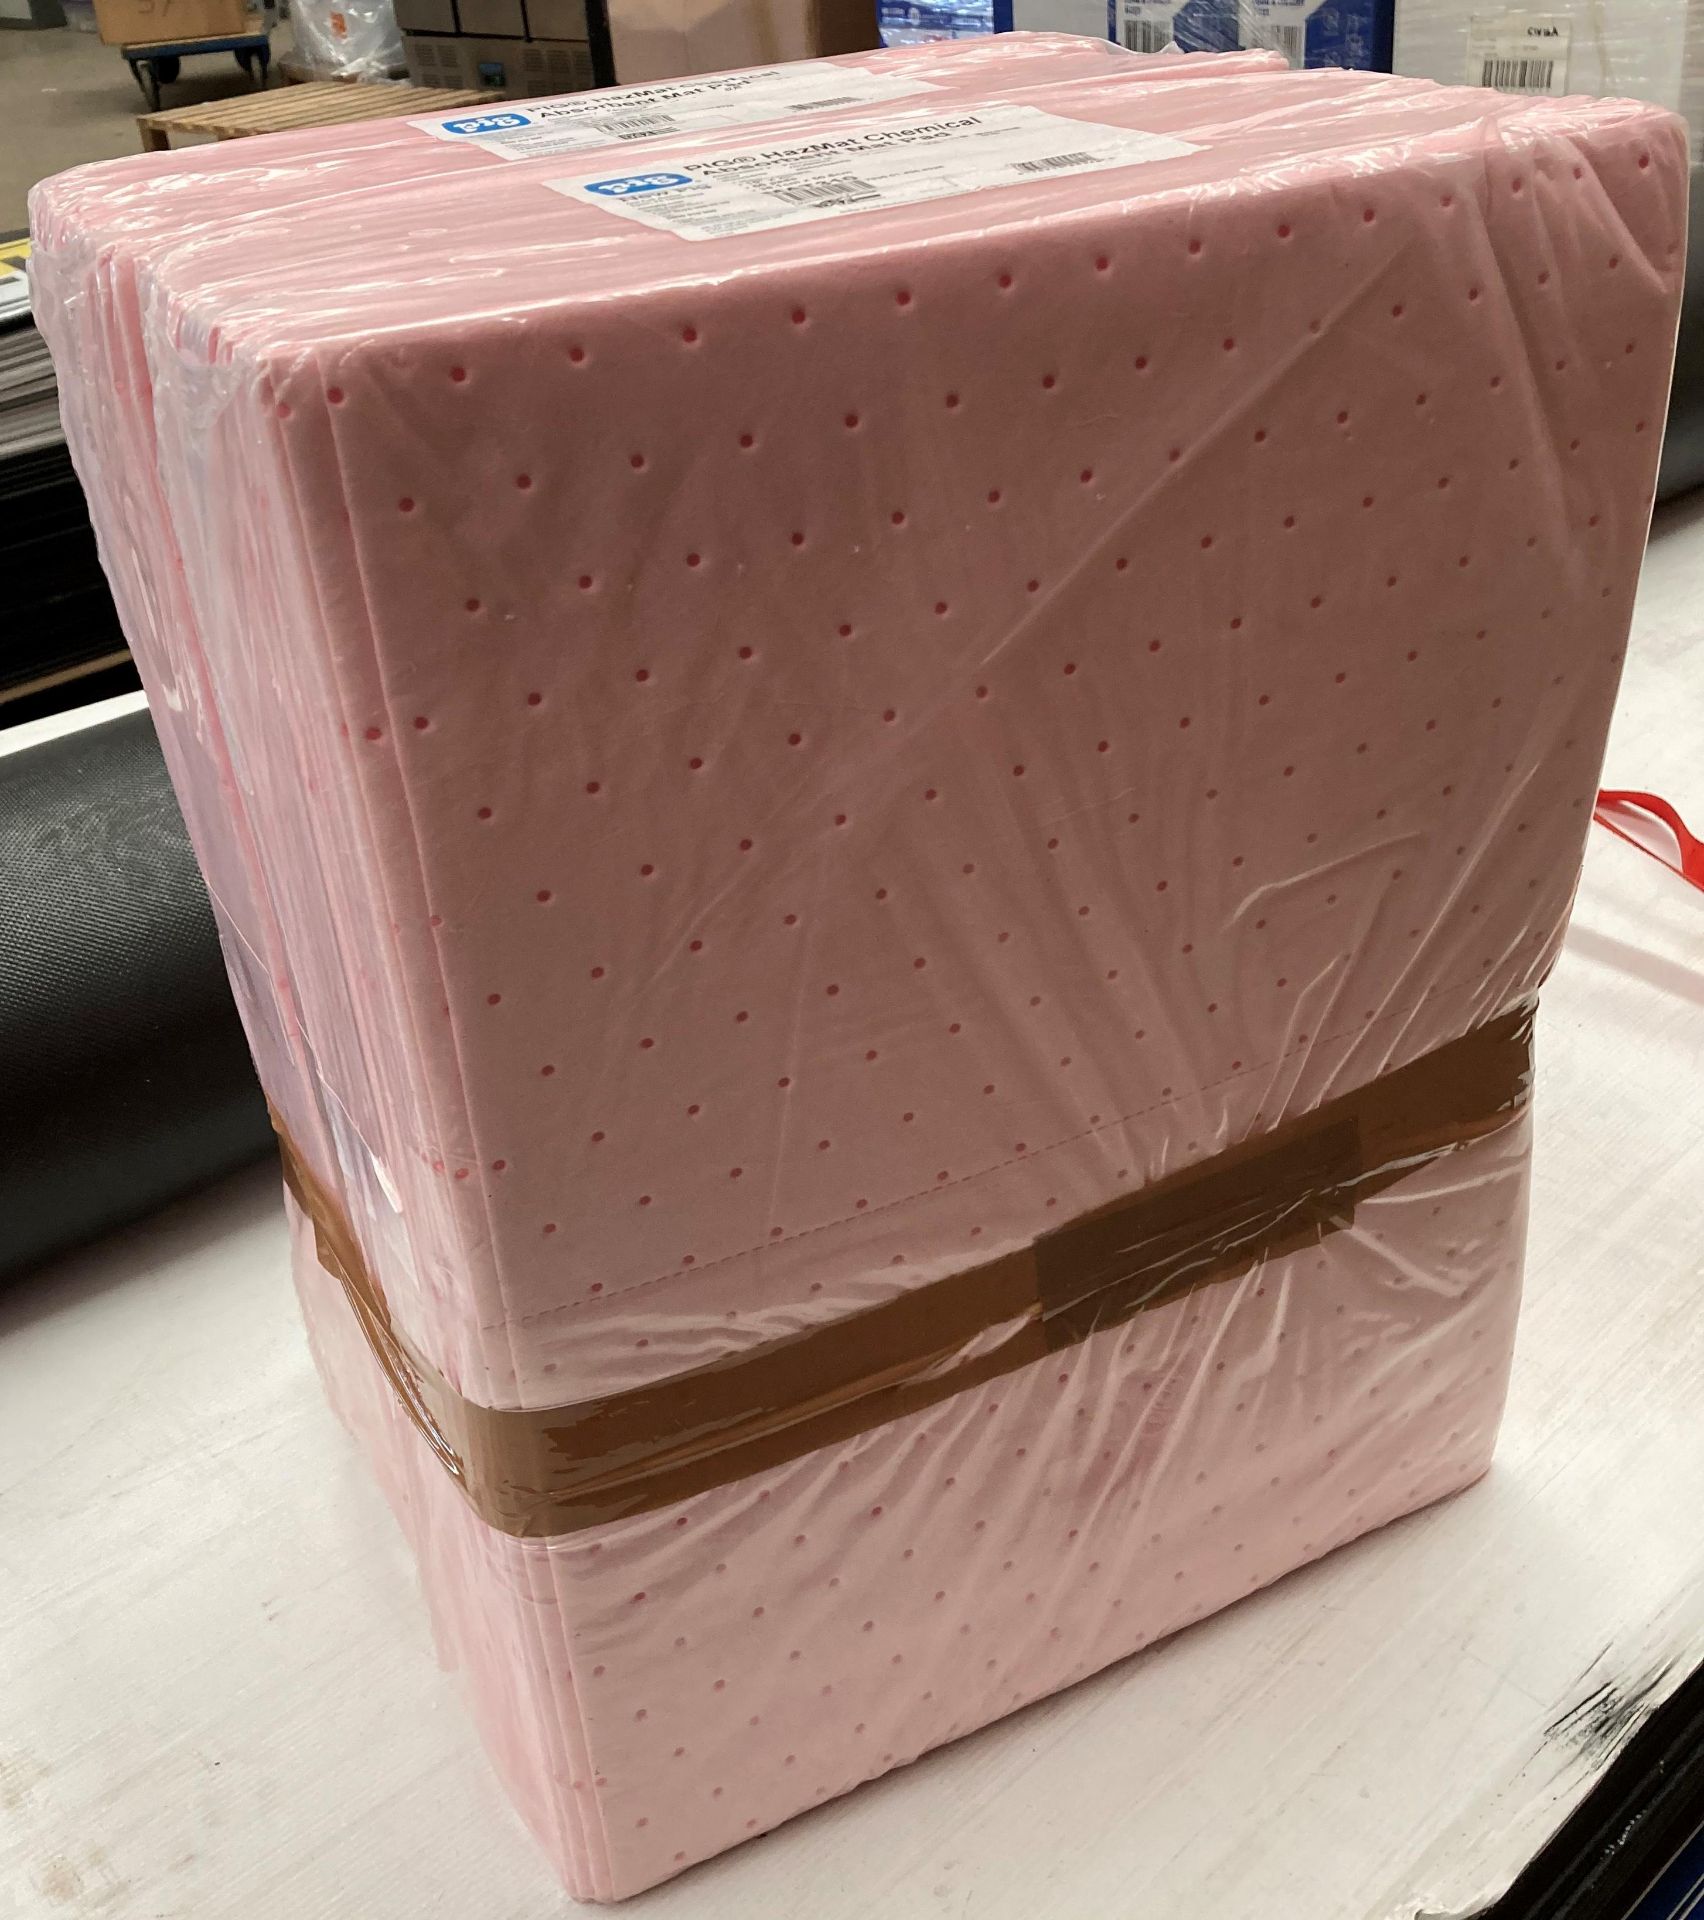 2 packs of 50 Pig Hazmat Chemical absorbent mat pads - 15" x 20" - Image 3 of 3